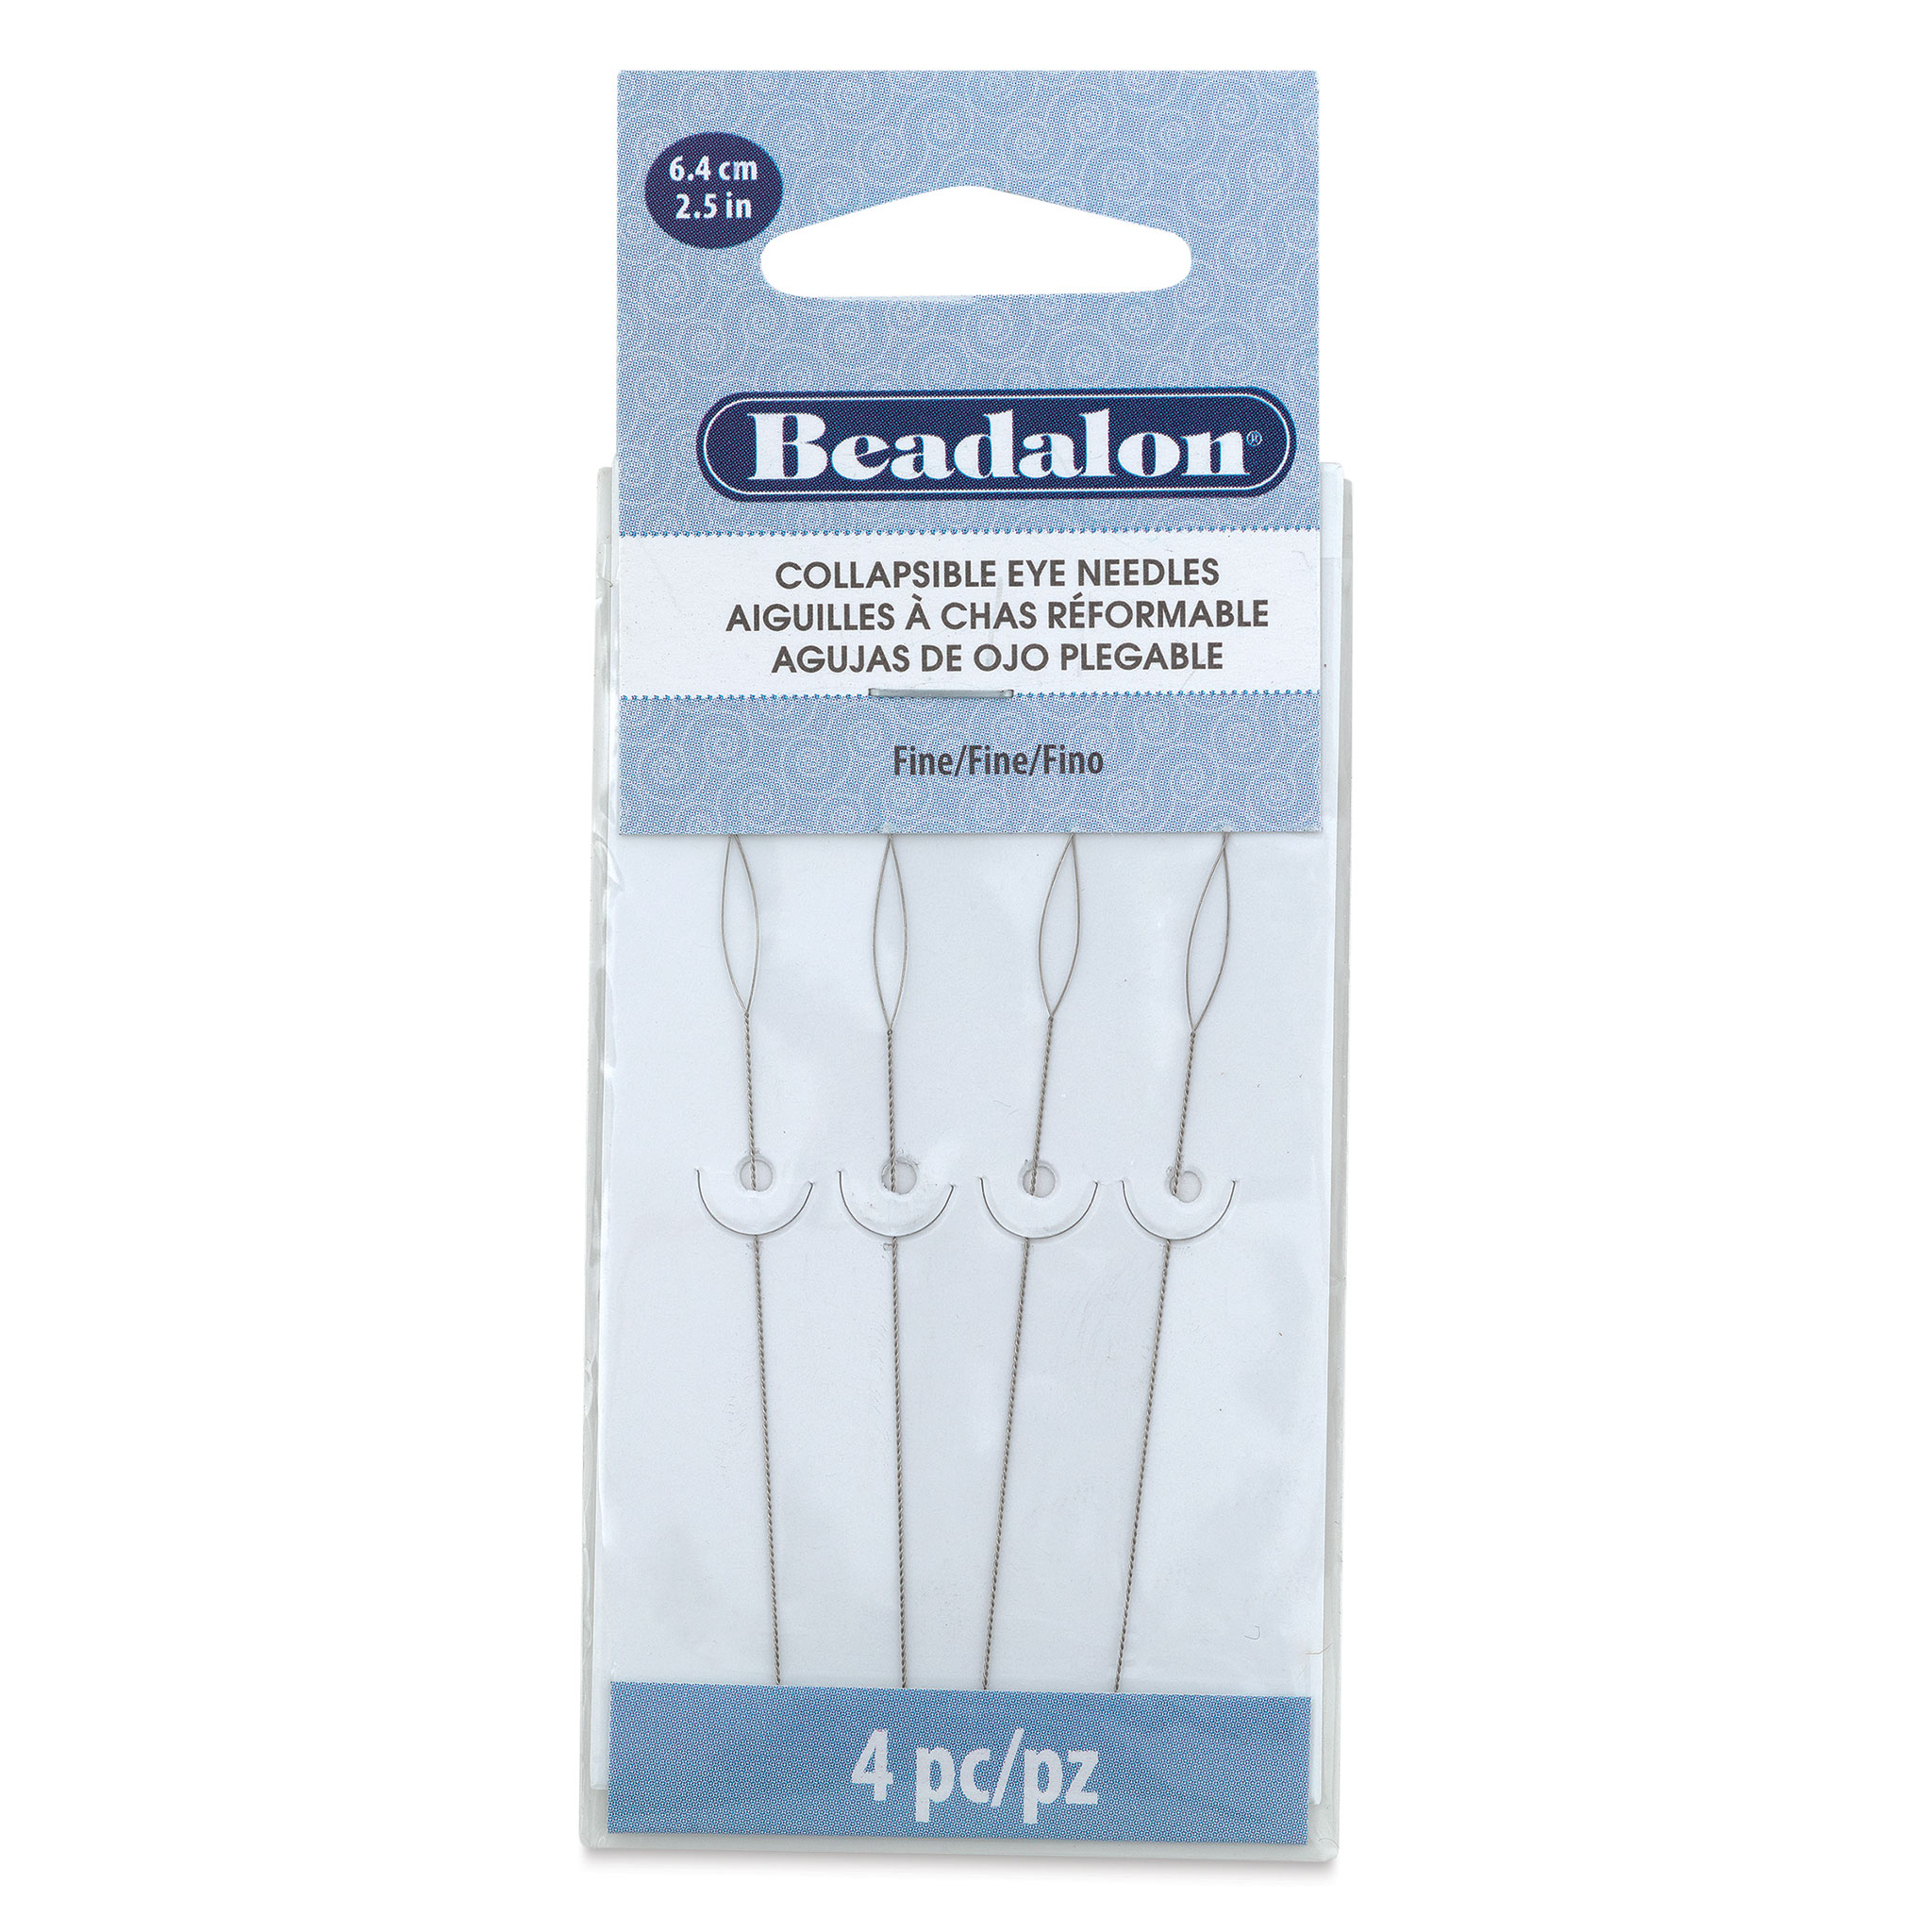 Beadalon Collapsible Eye Needles 2.5 4/Pkg Medium